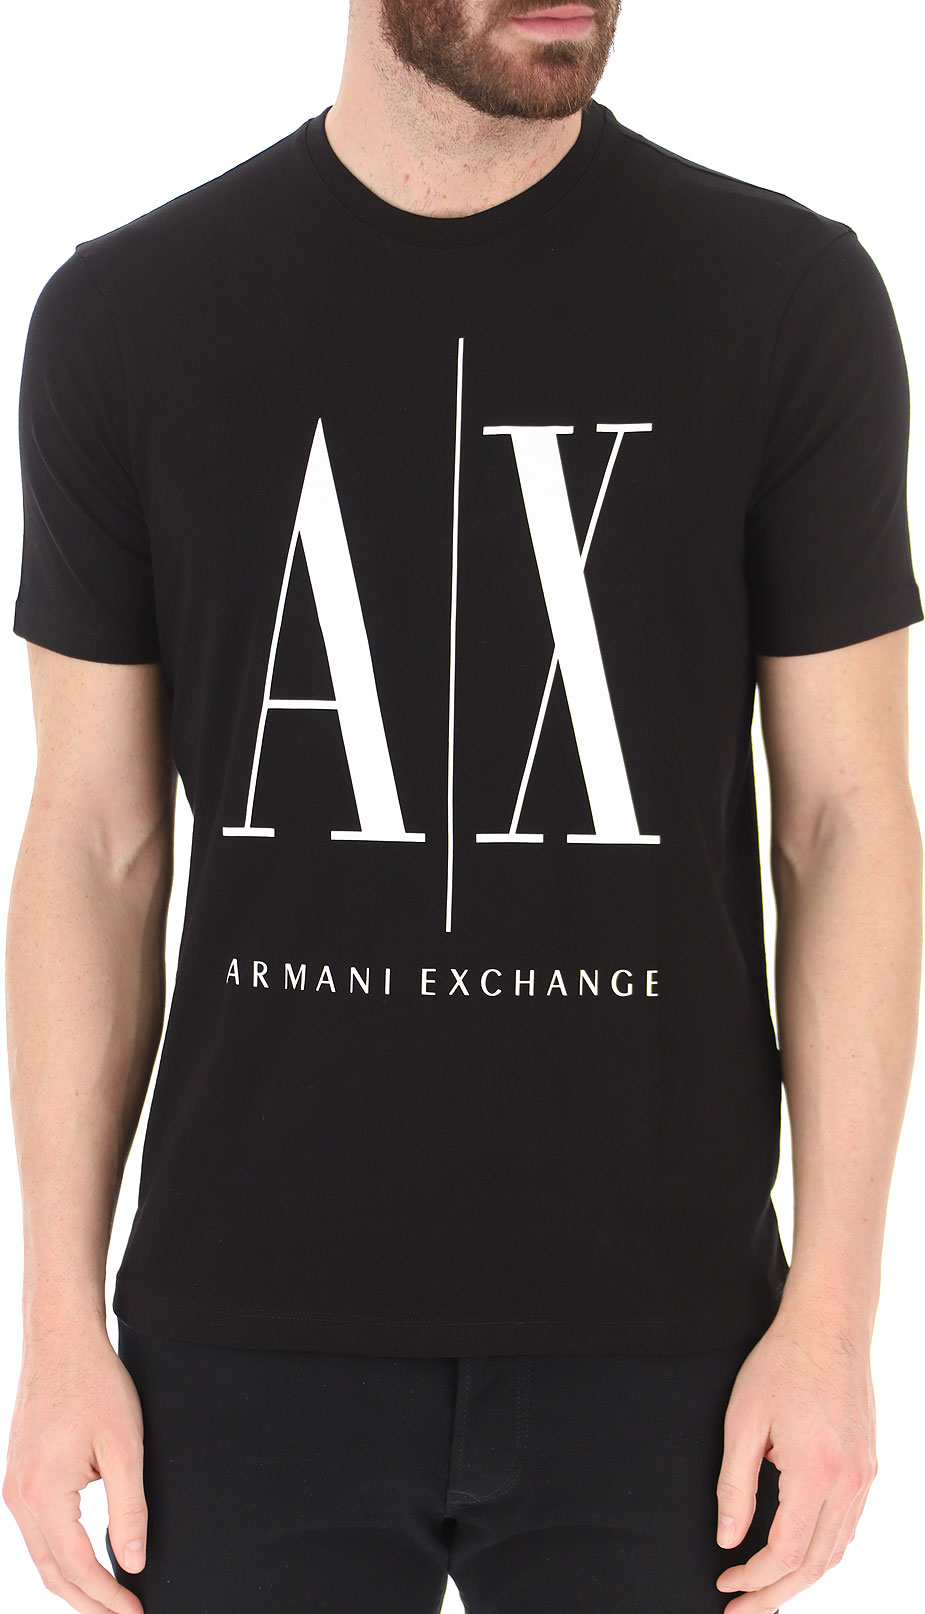 Mens Clothing Armani Exchange, Style code: 8nztpa-zjh4z-1200